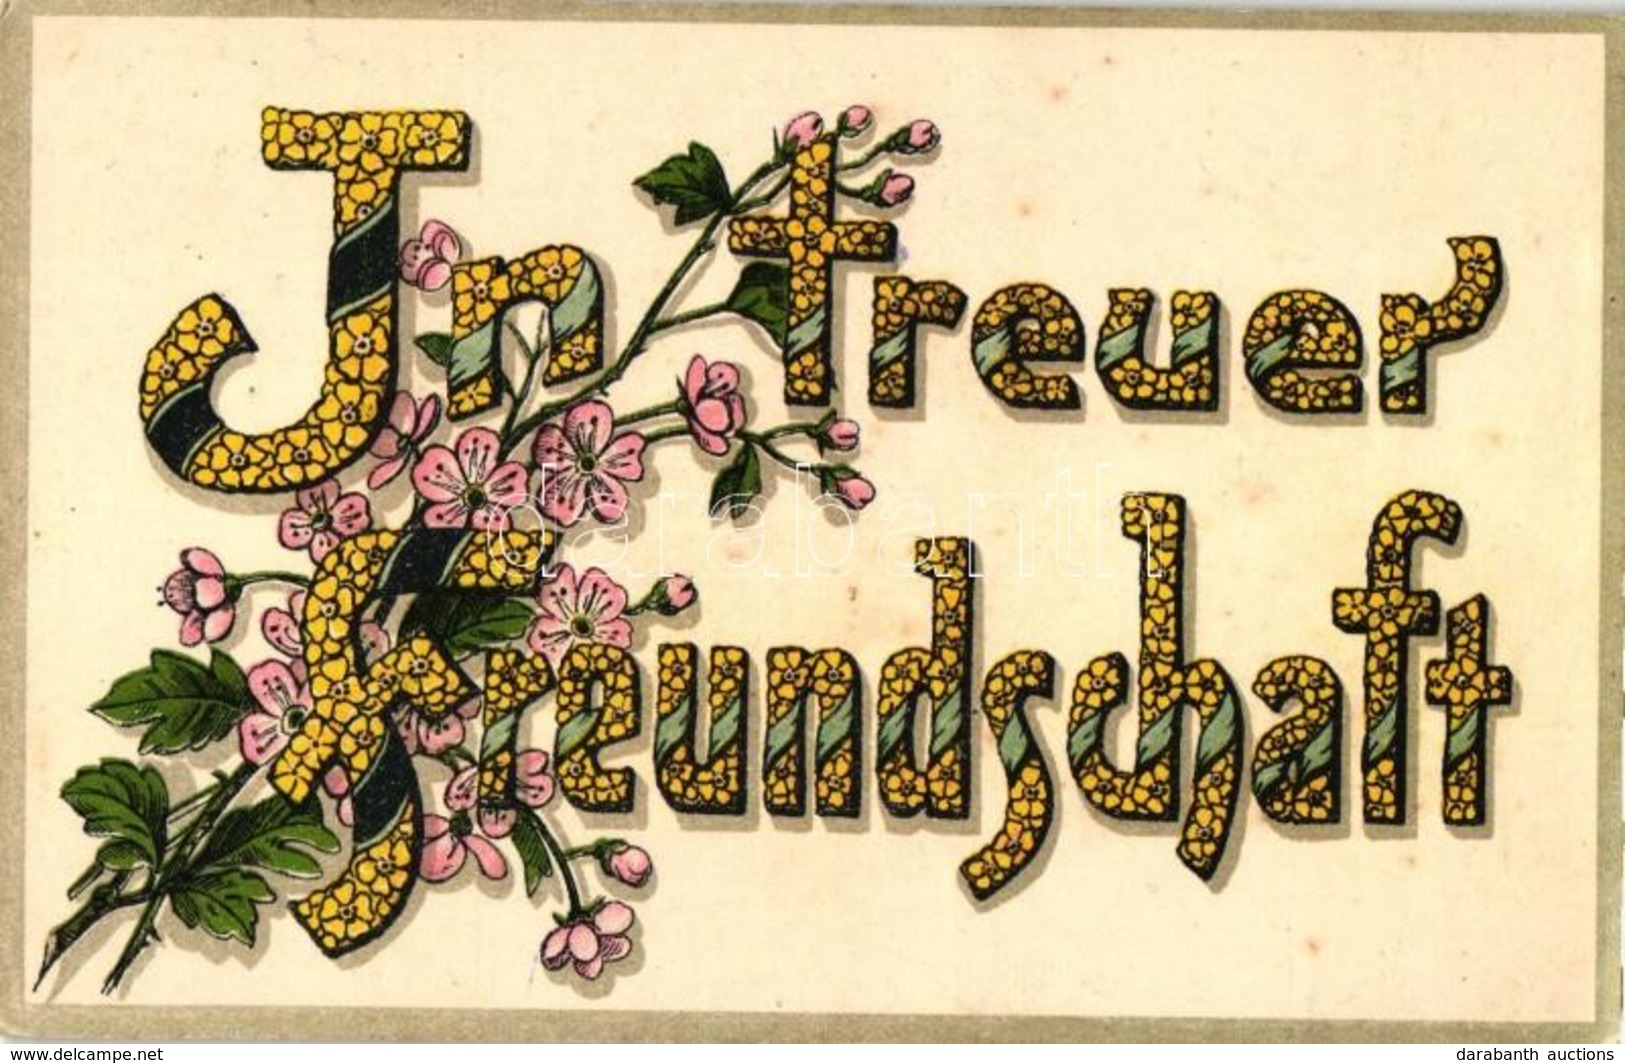 T2/T3 'In Treuer Freundschaft' / 'with Honest Friendship', Greeting Card, Litho (EK) - Zonder Classificatie